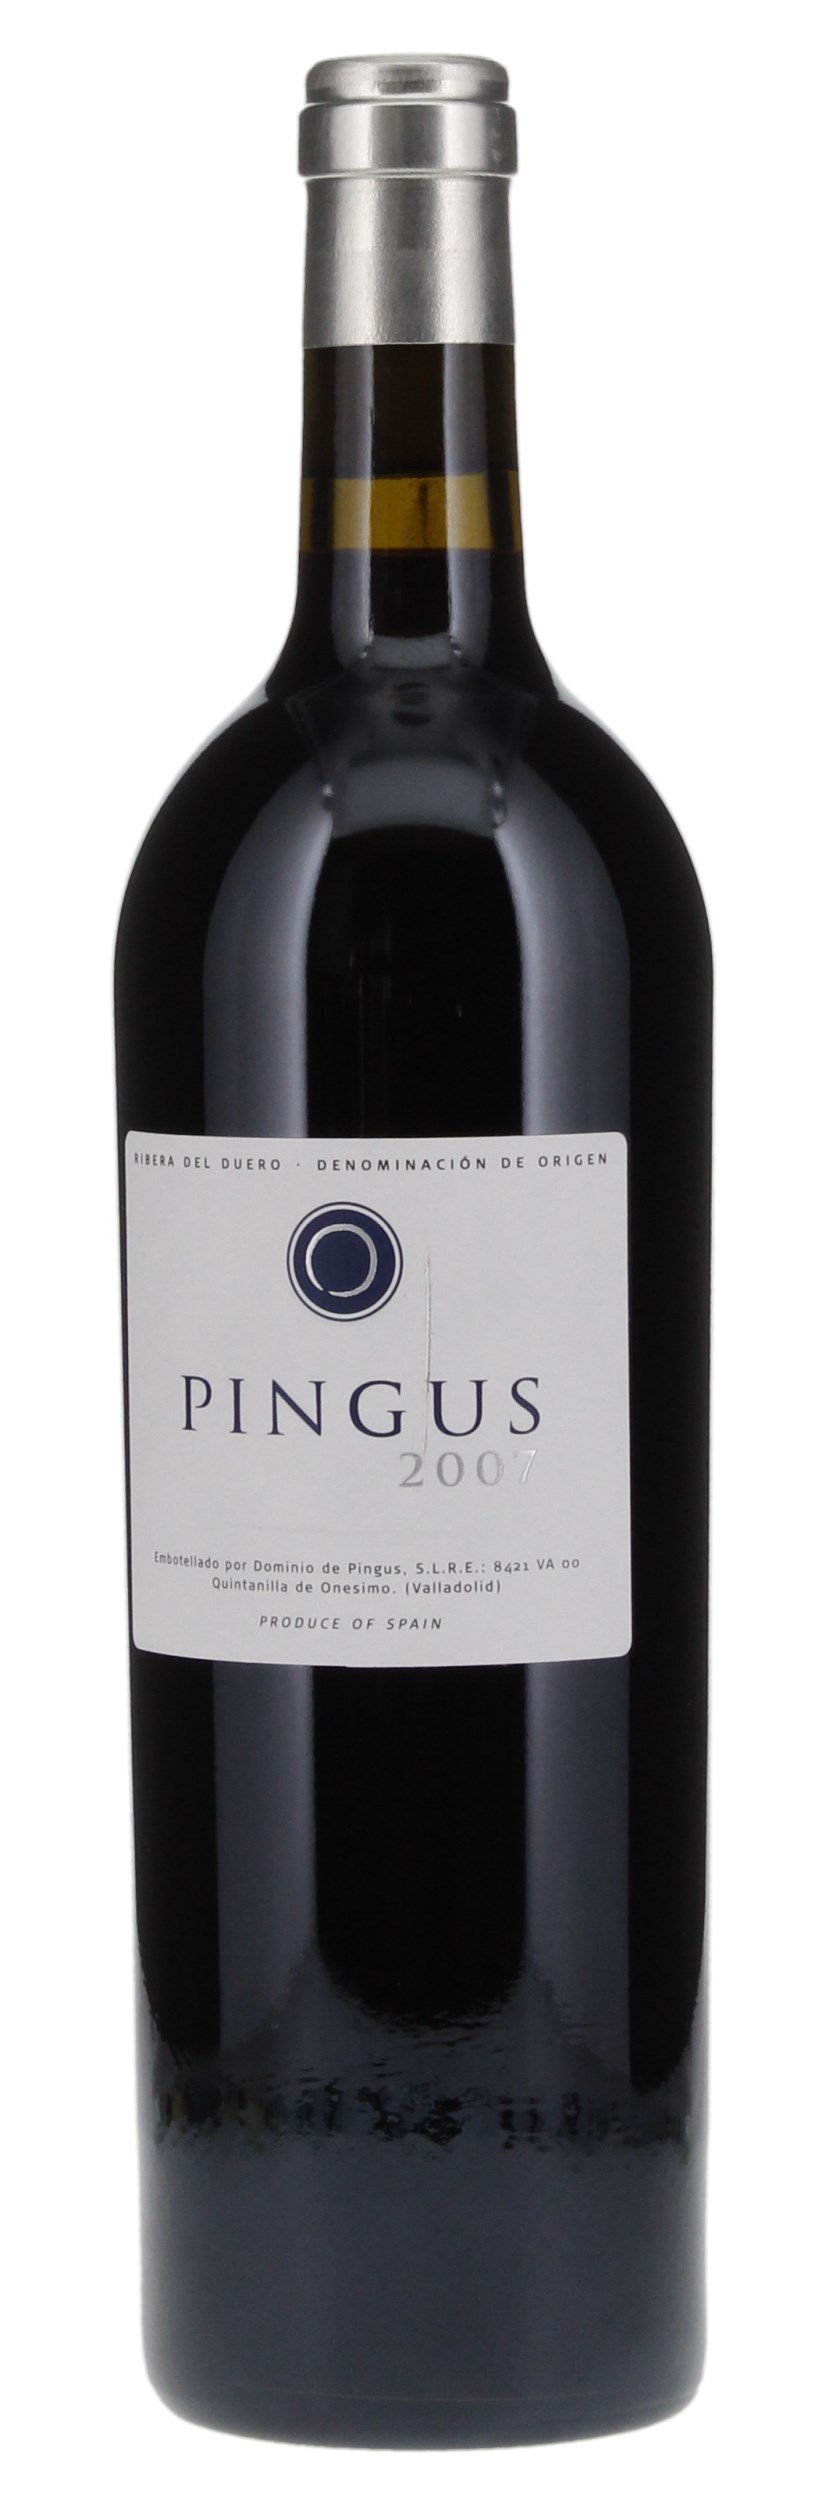 2007 Dominio de Pingus "Pingus", 750ml